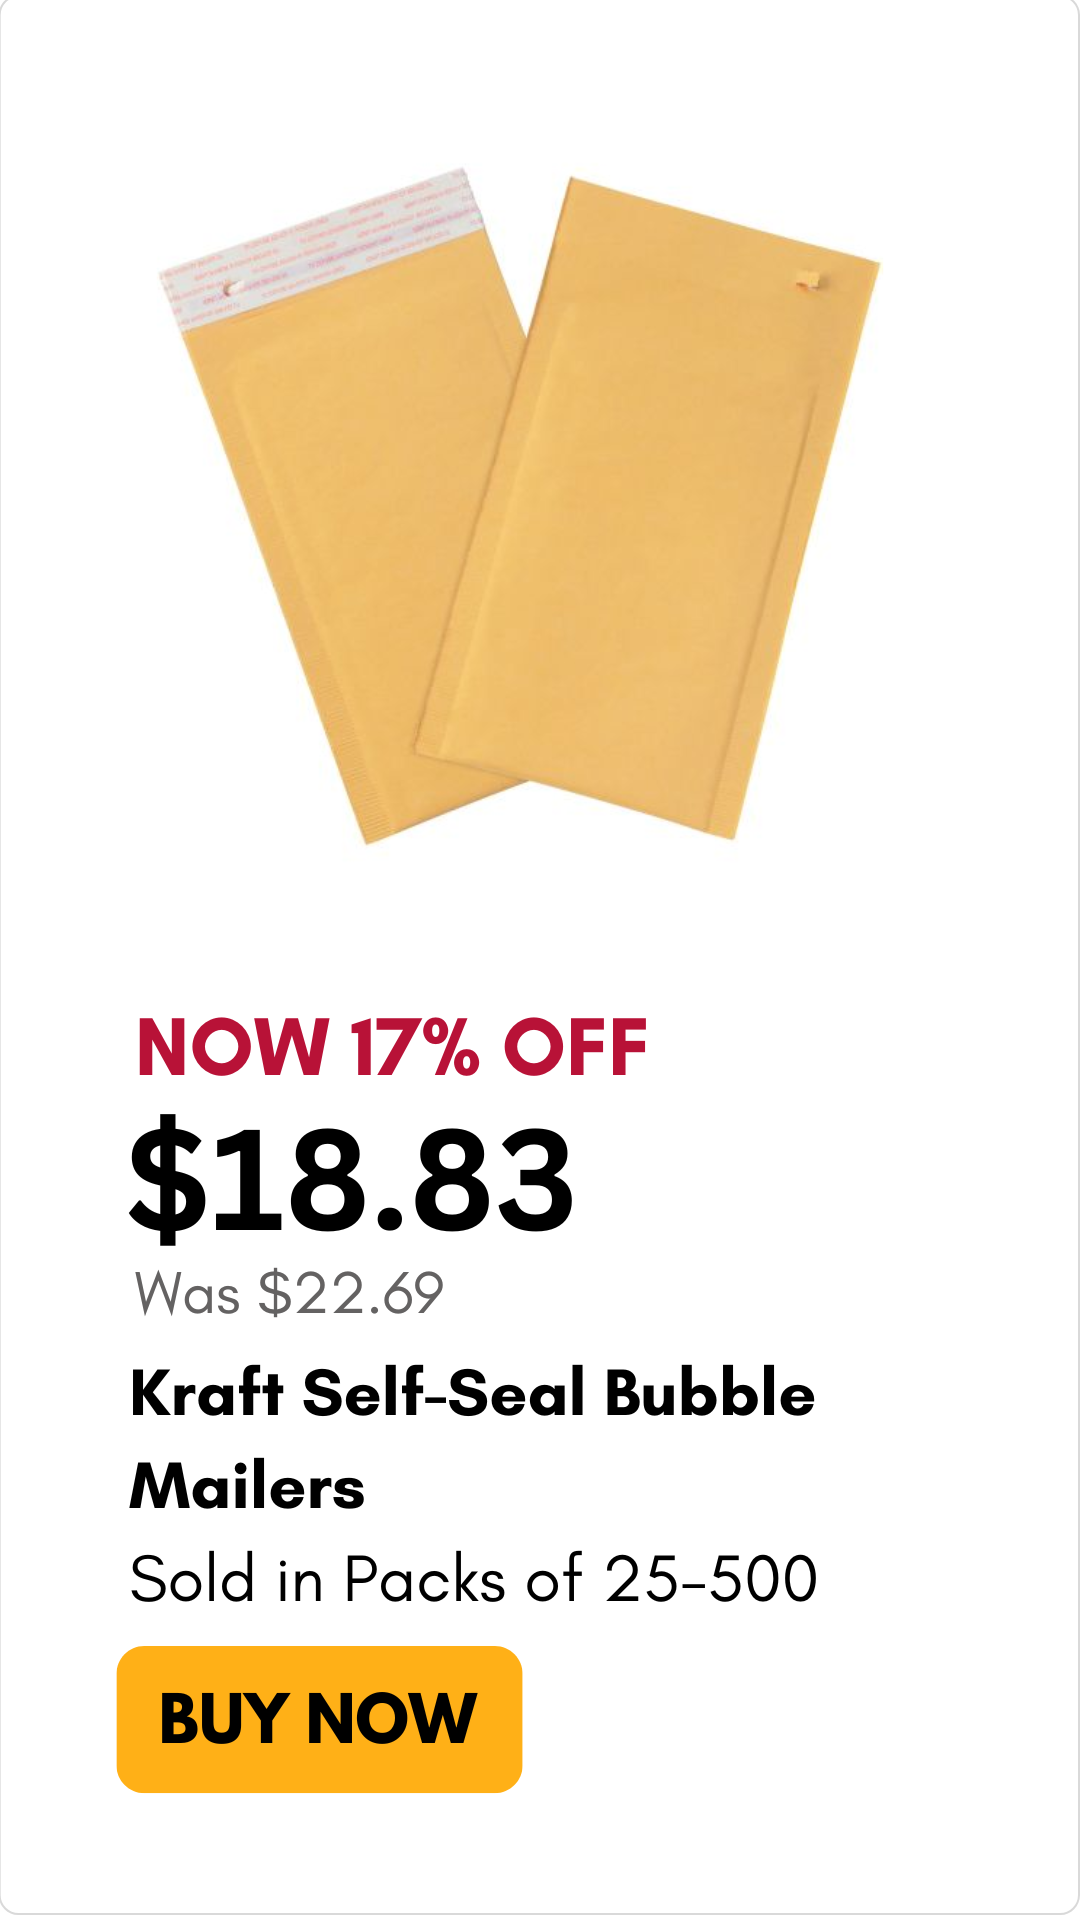 Kraft Self-Seal Bubble Mailers on sale for 17% off on mybinding.com